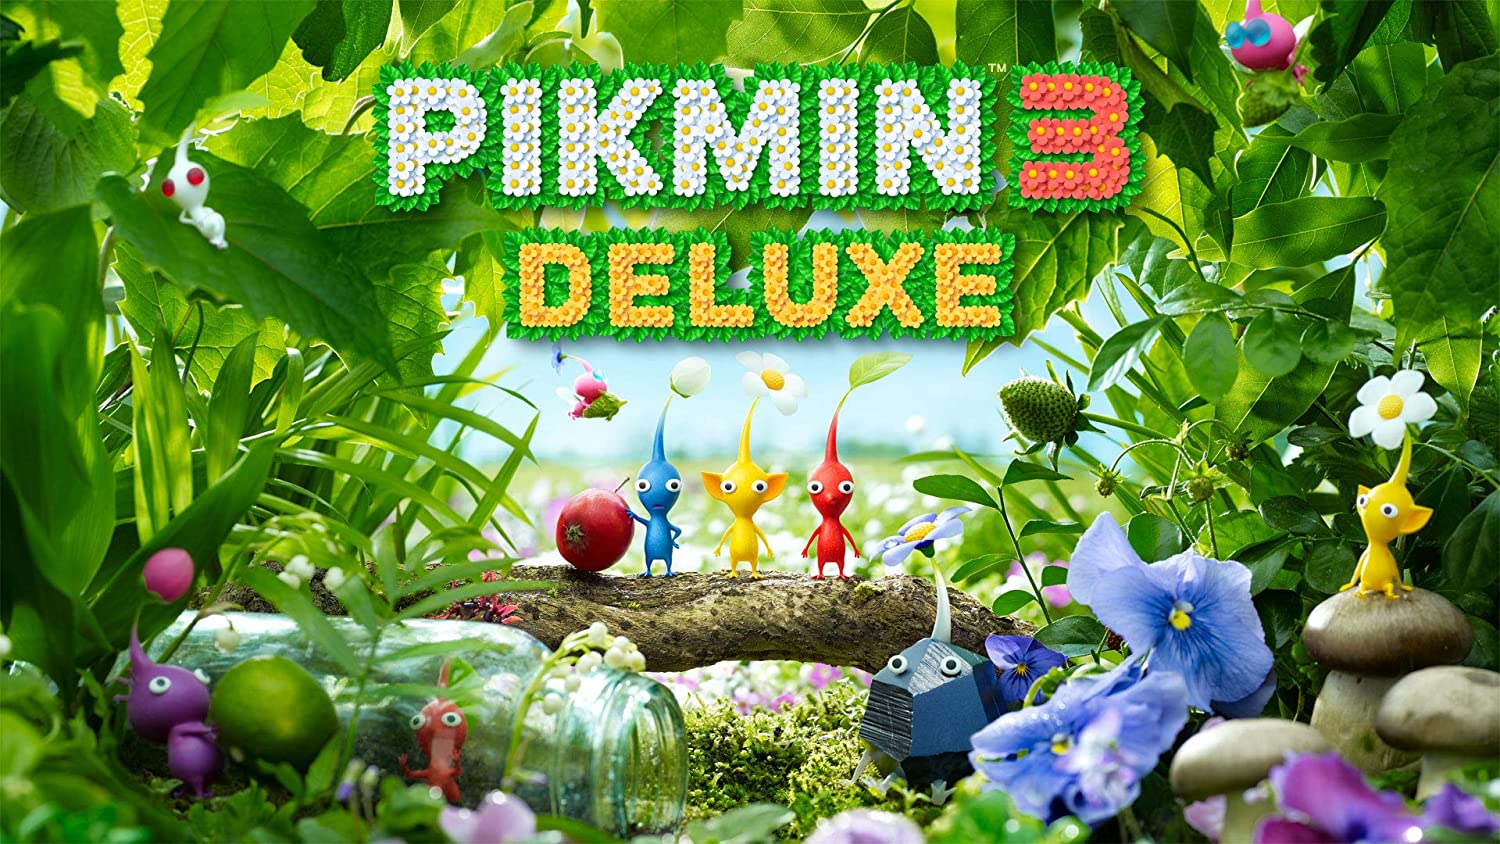 Pikmin 3 Deluxe - Nintendo Switch Digital Download - Amazon - $39.99